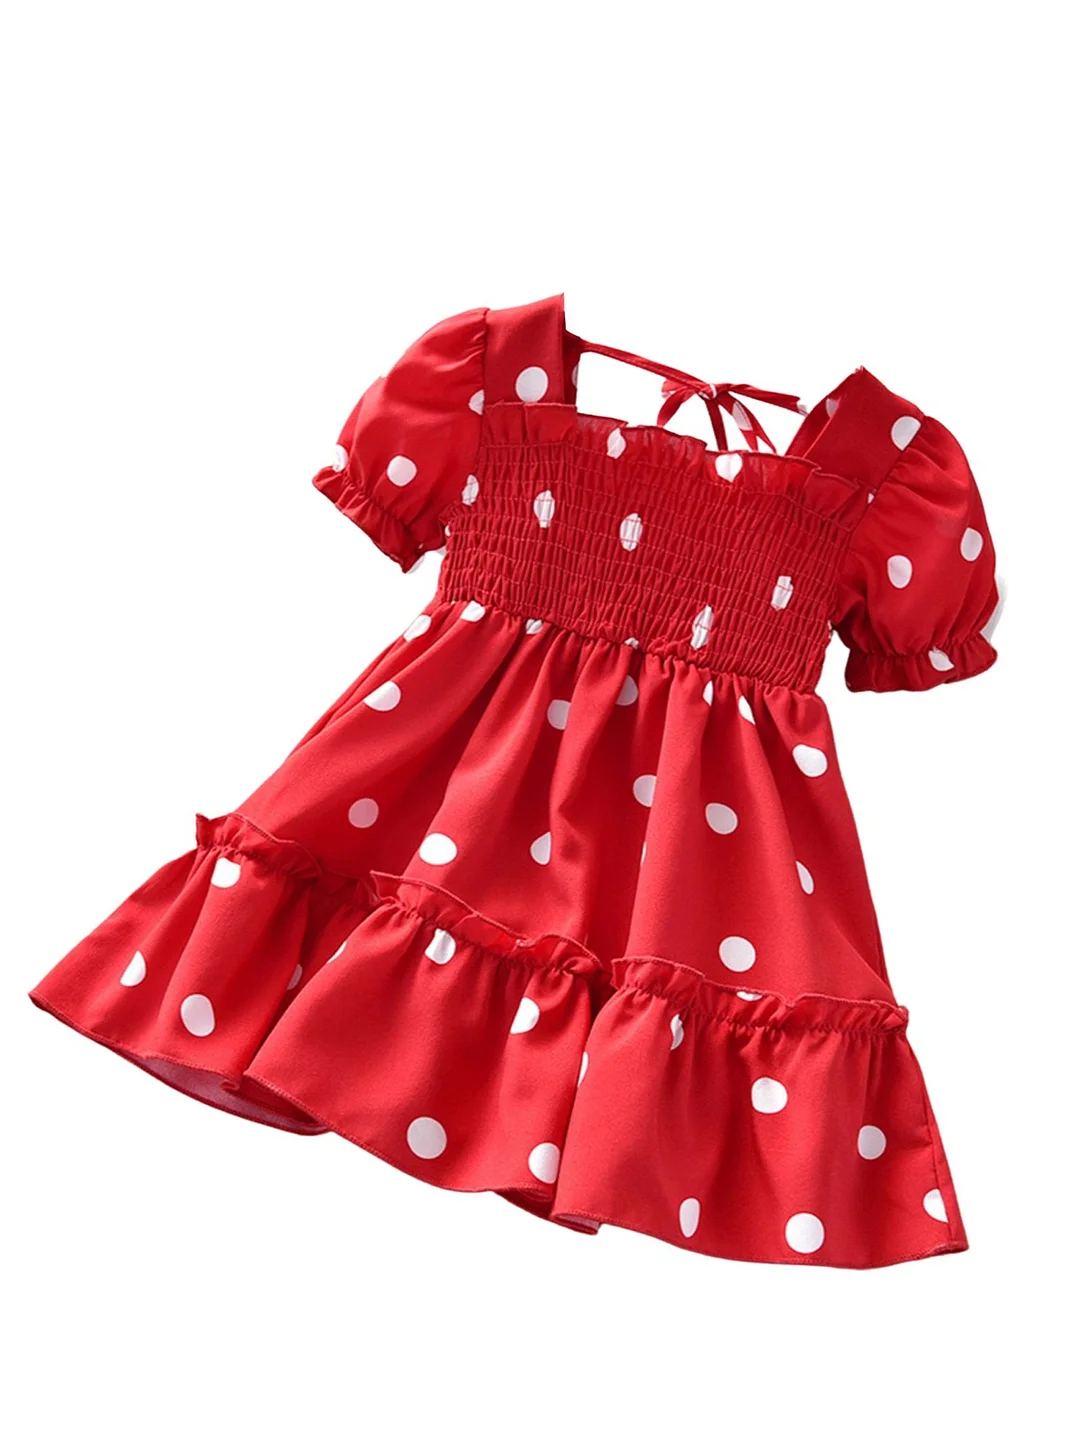 2021 Baby Summer Clothing Kids Girls Fashion Shortsleeve Polka Dot Dress Stylish Elastic Dress for Children Baby Girls